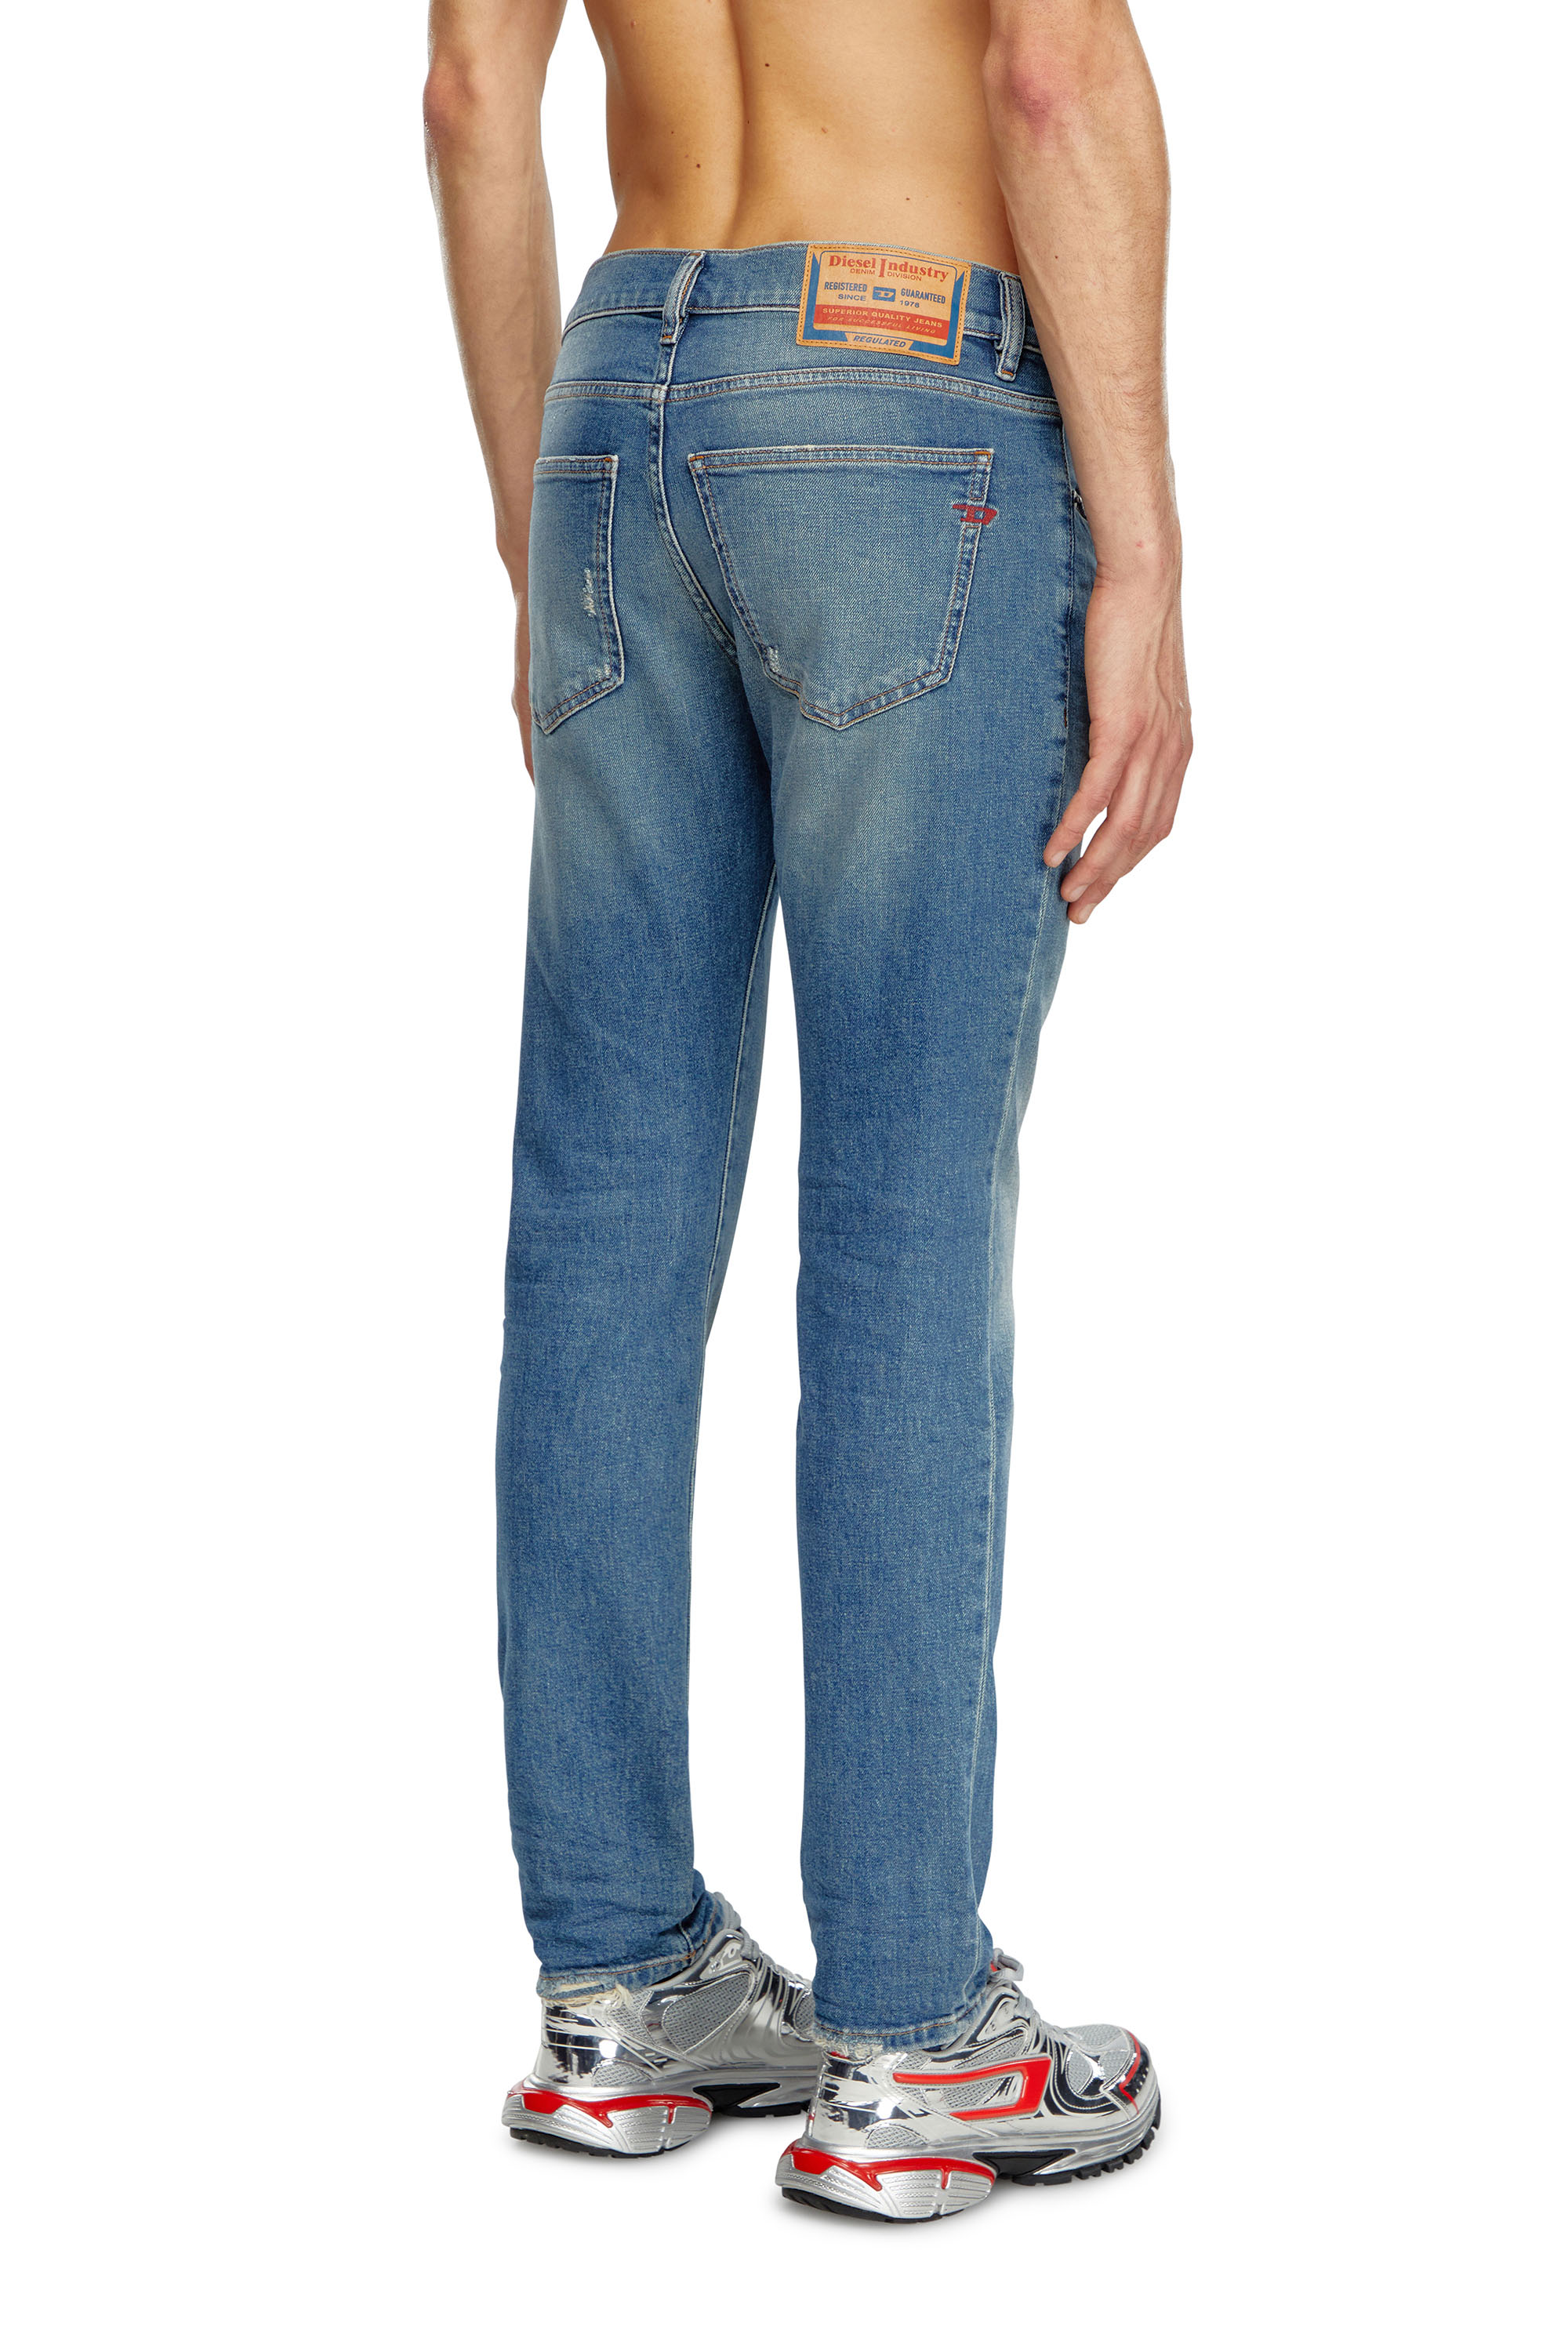 Diesel - Slim Jeans 2019 D-Strukt 0GRDG, Hombre Slim Jeans - 2019 D-Strukt in Azul marino - Image 4